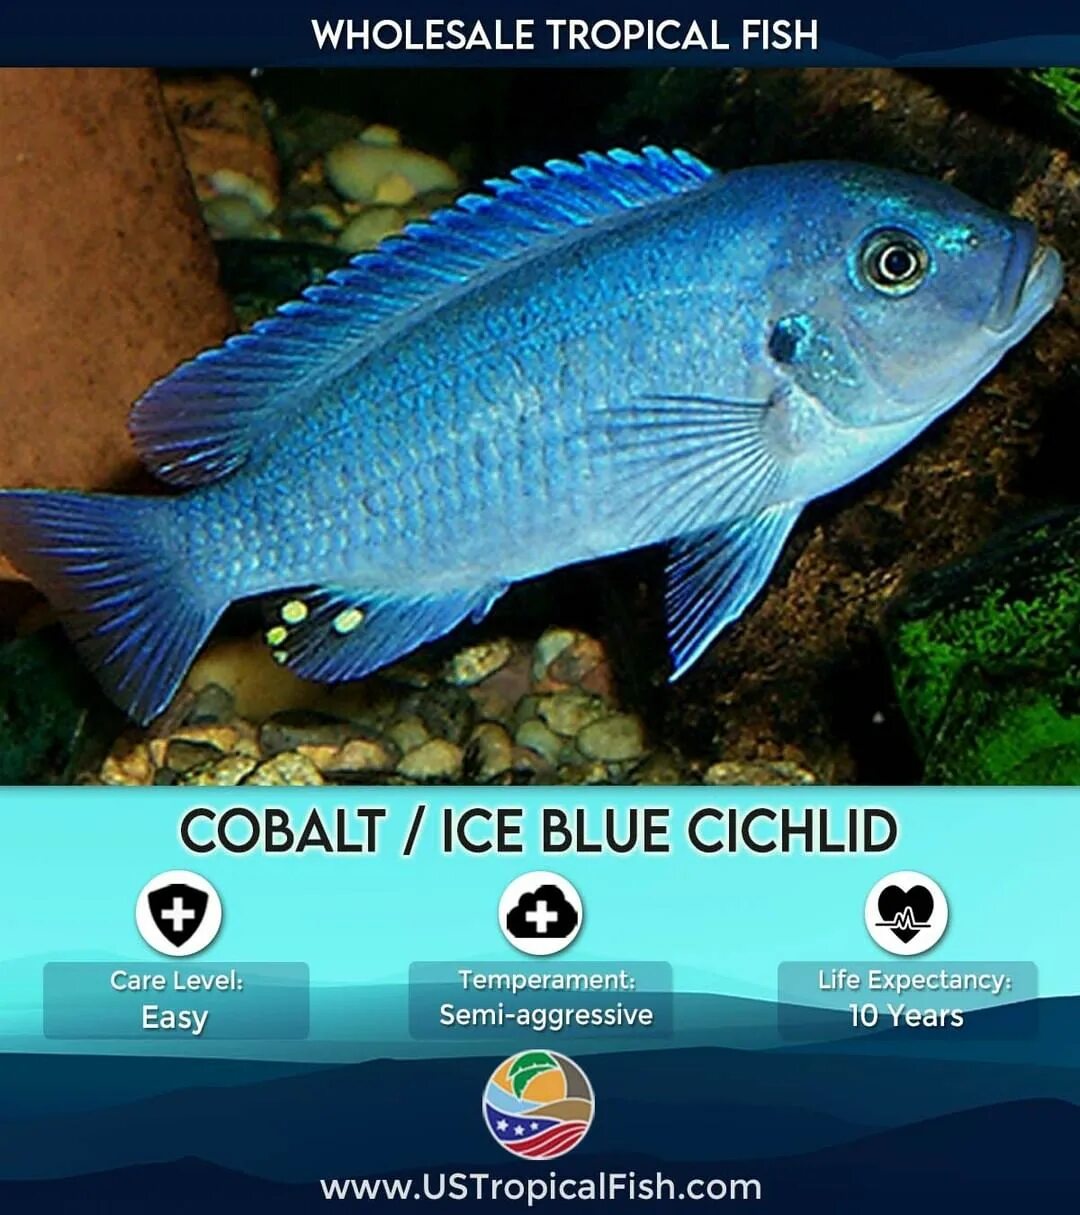 US Tropical Fish в Instagram: "Cobalt / Ice Blue Cichlid or more commo...